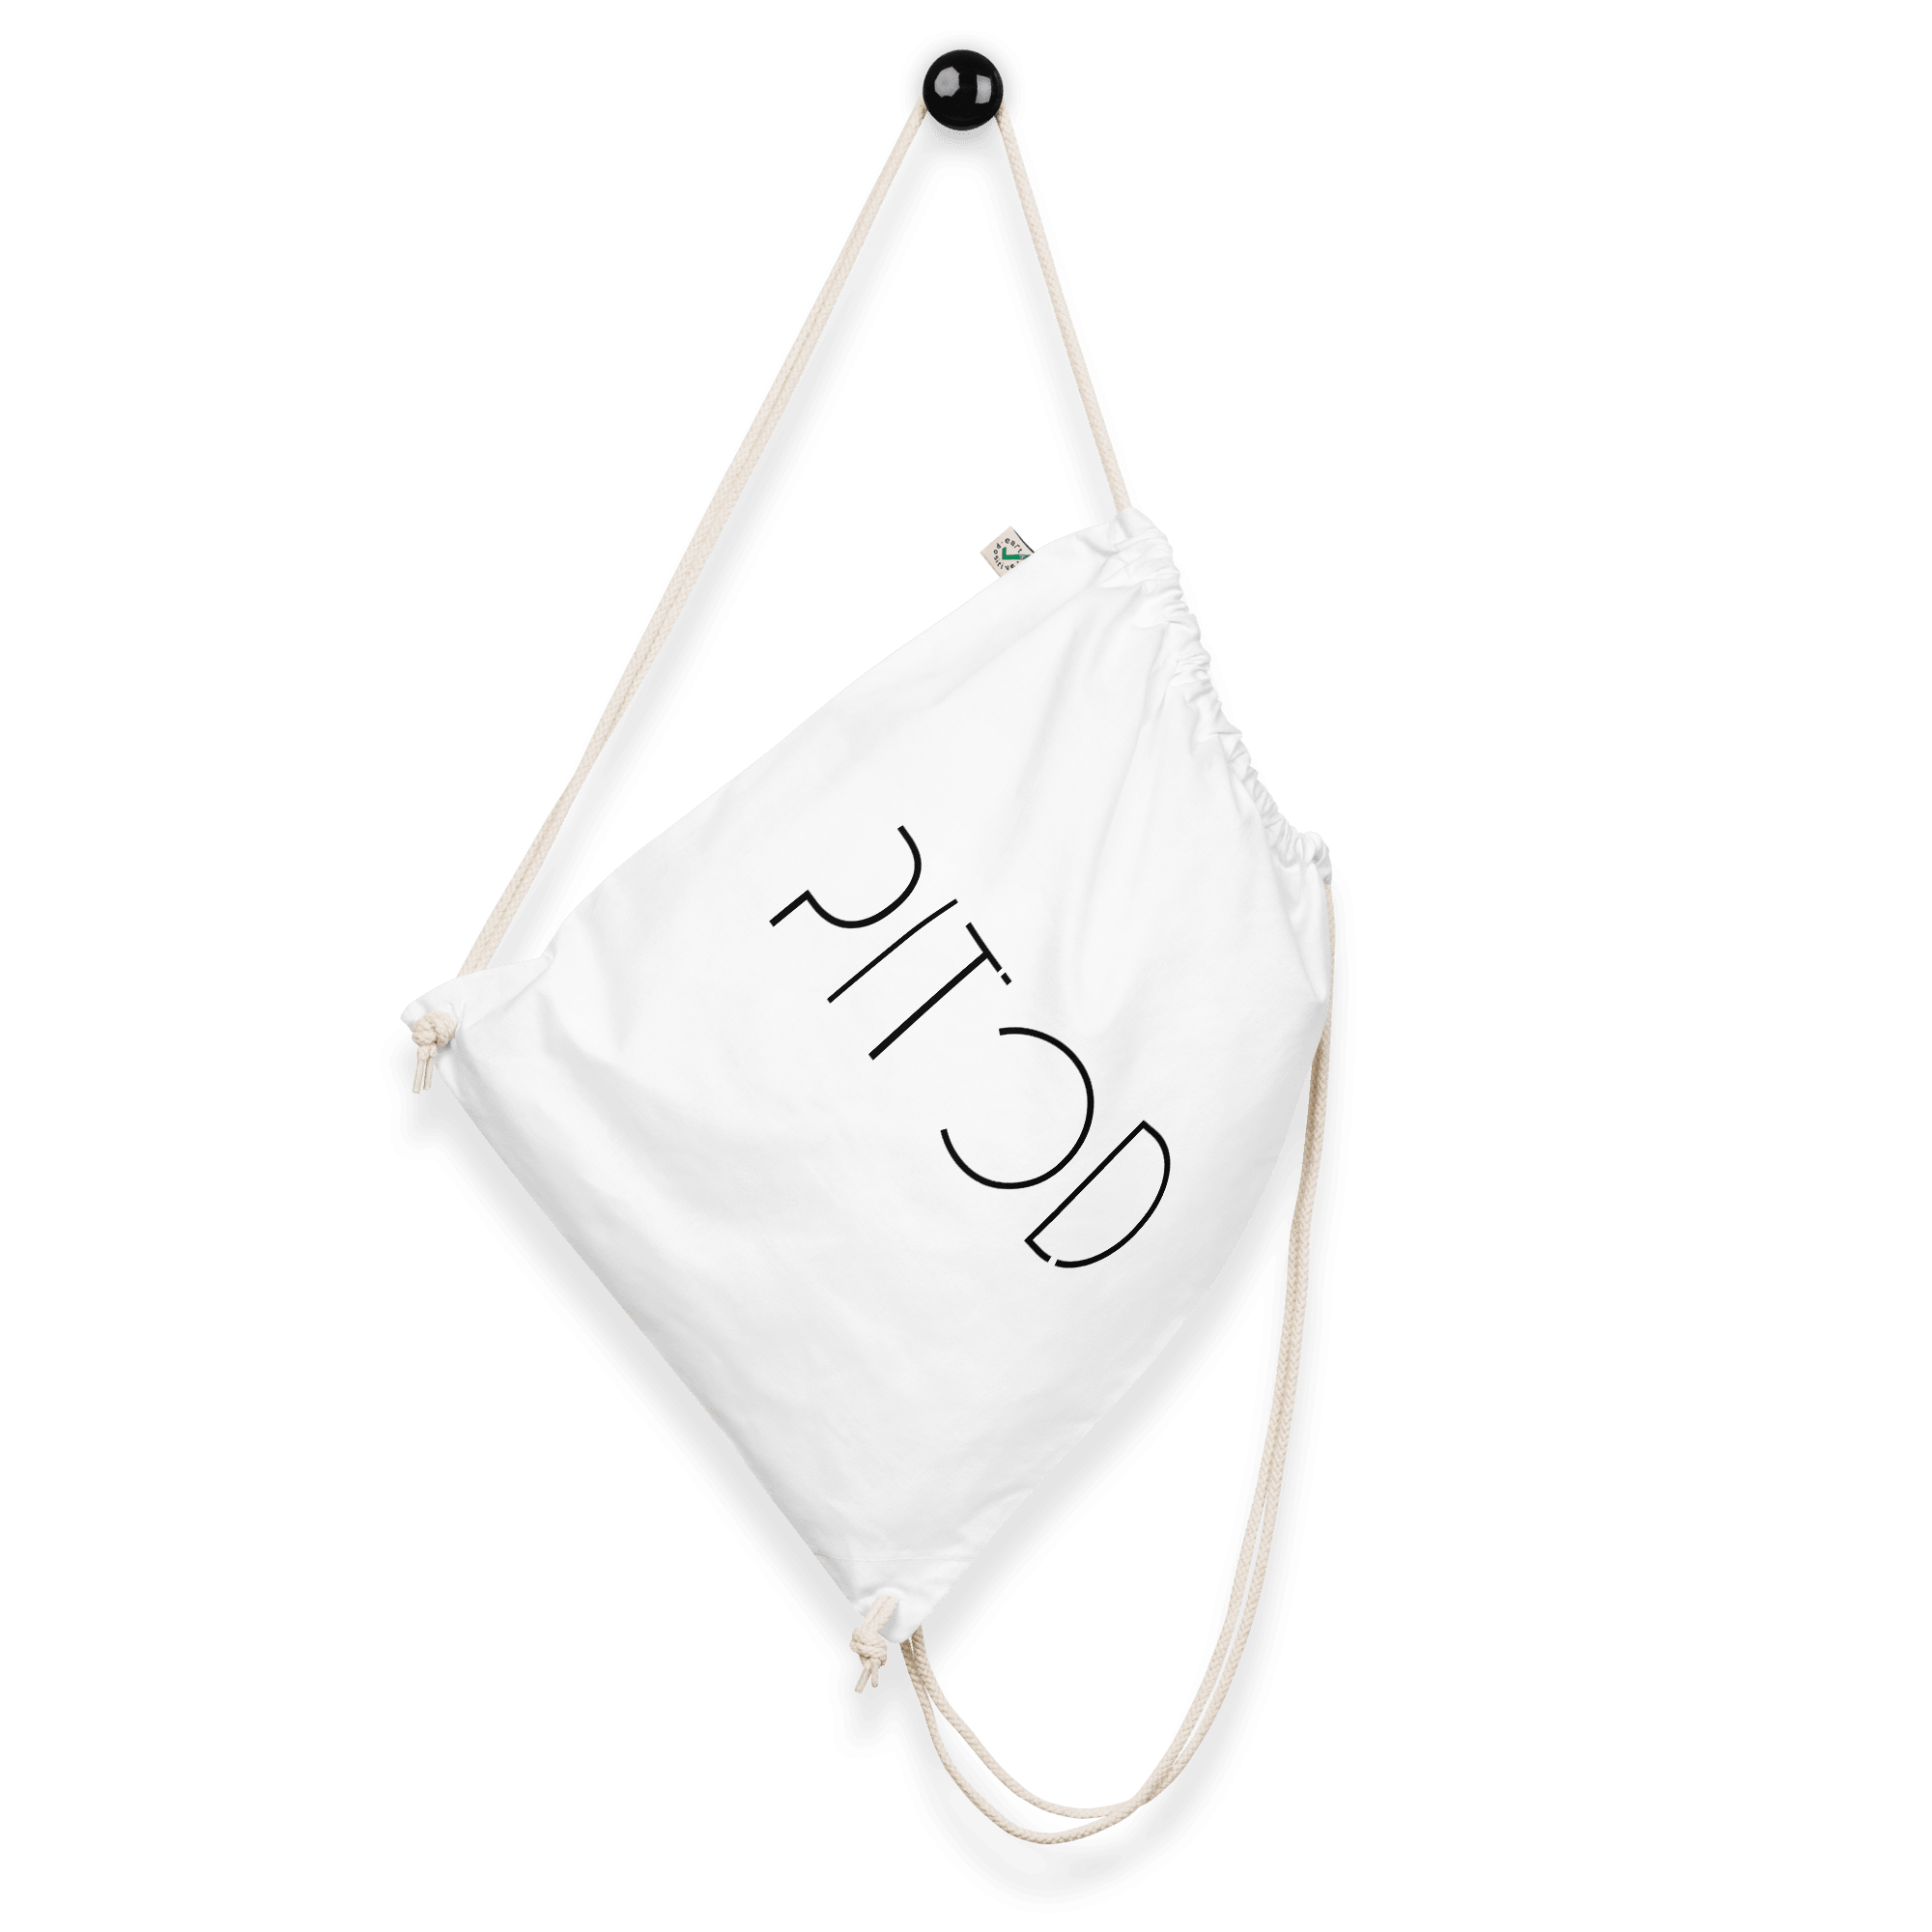 Logo Drawstring Bag | Handbags | pitod.com